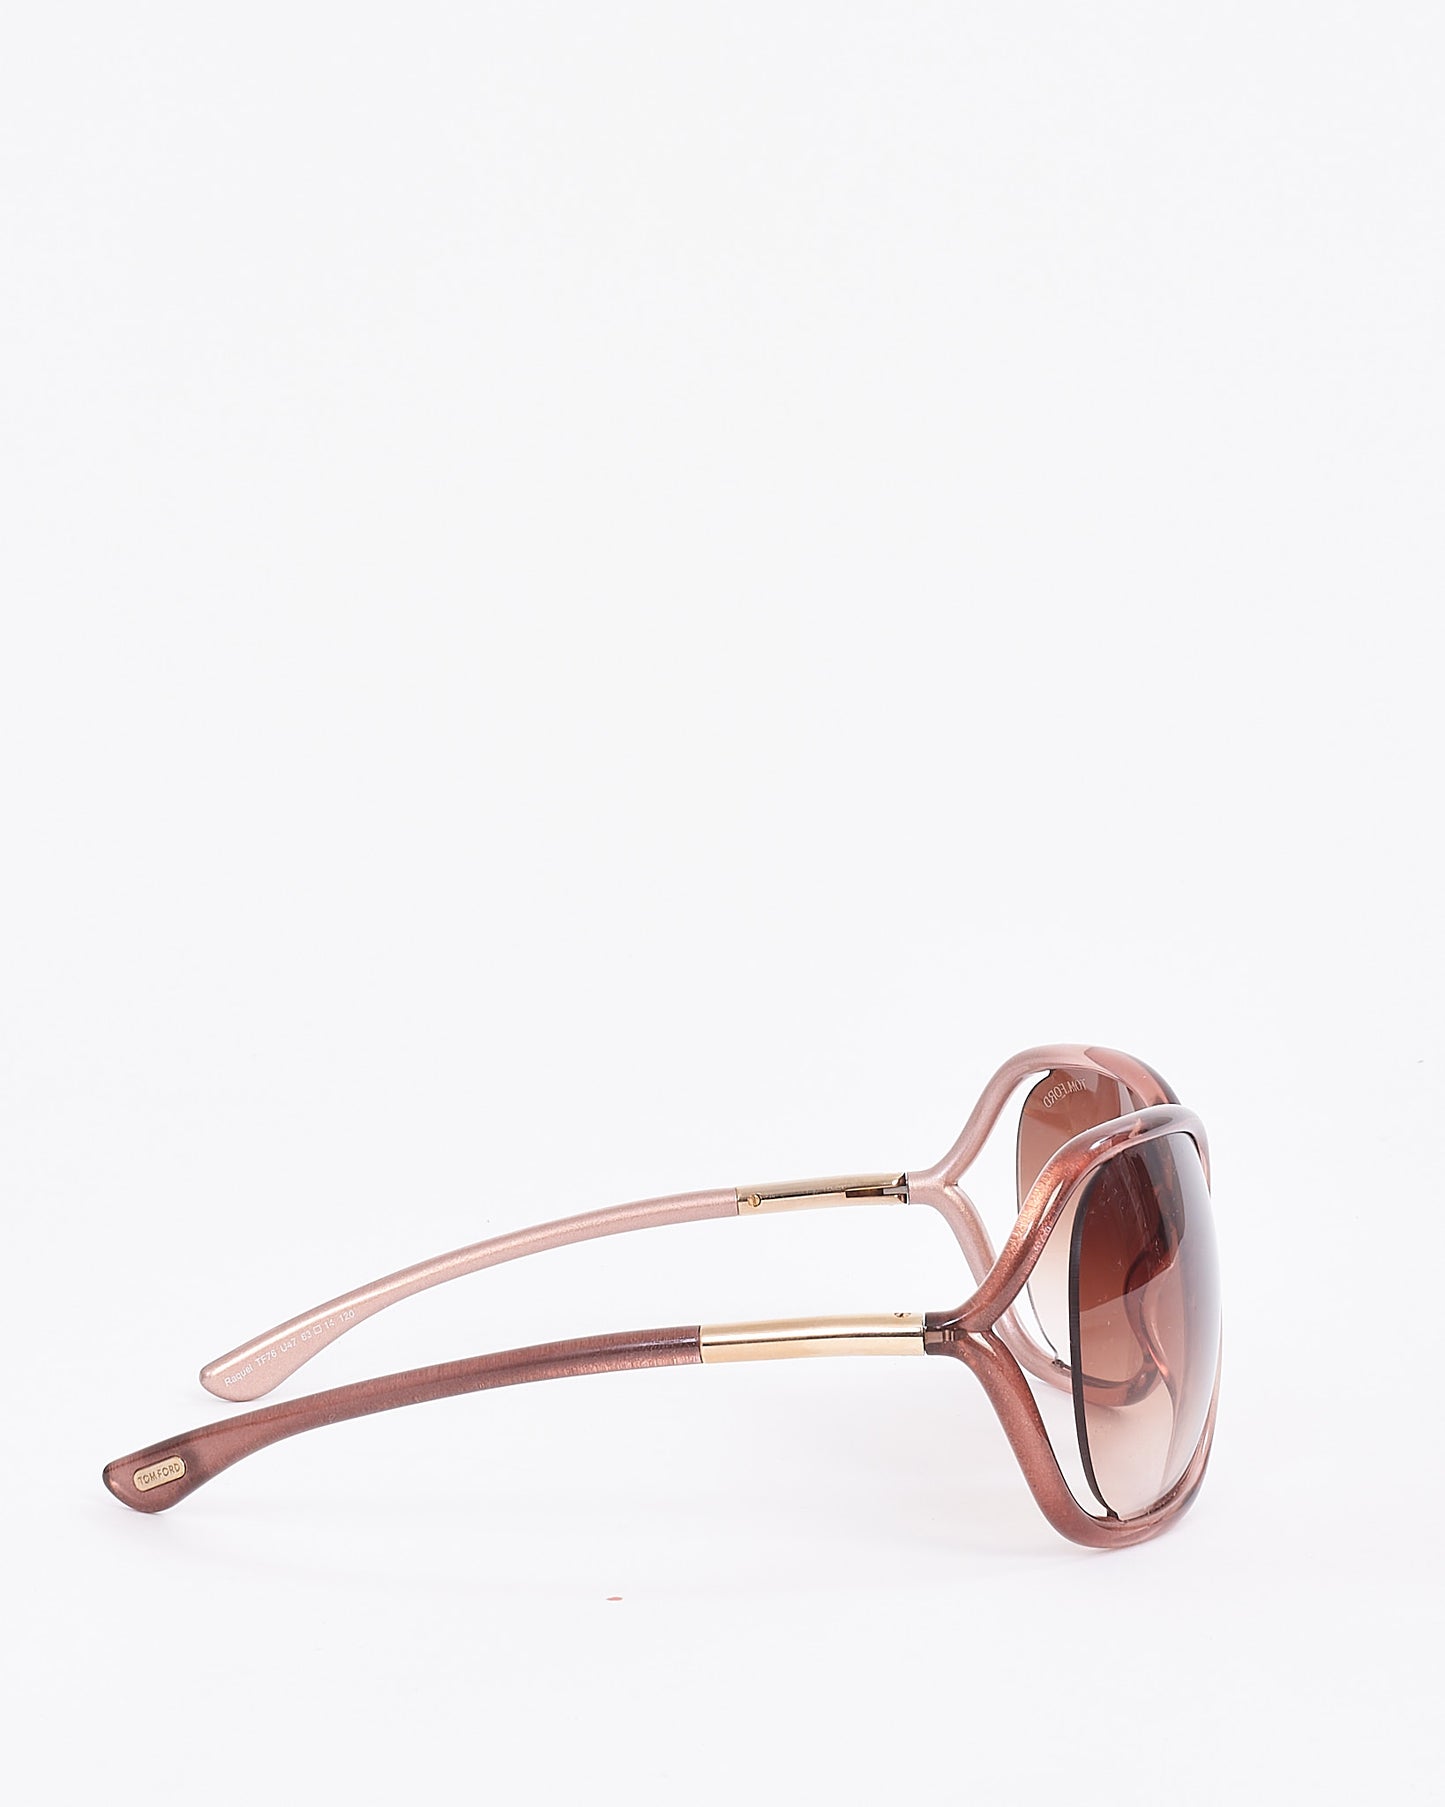 Tom Ford Pink Oversized Raquel TF76 Gradient Sunglasses